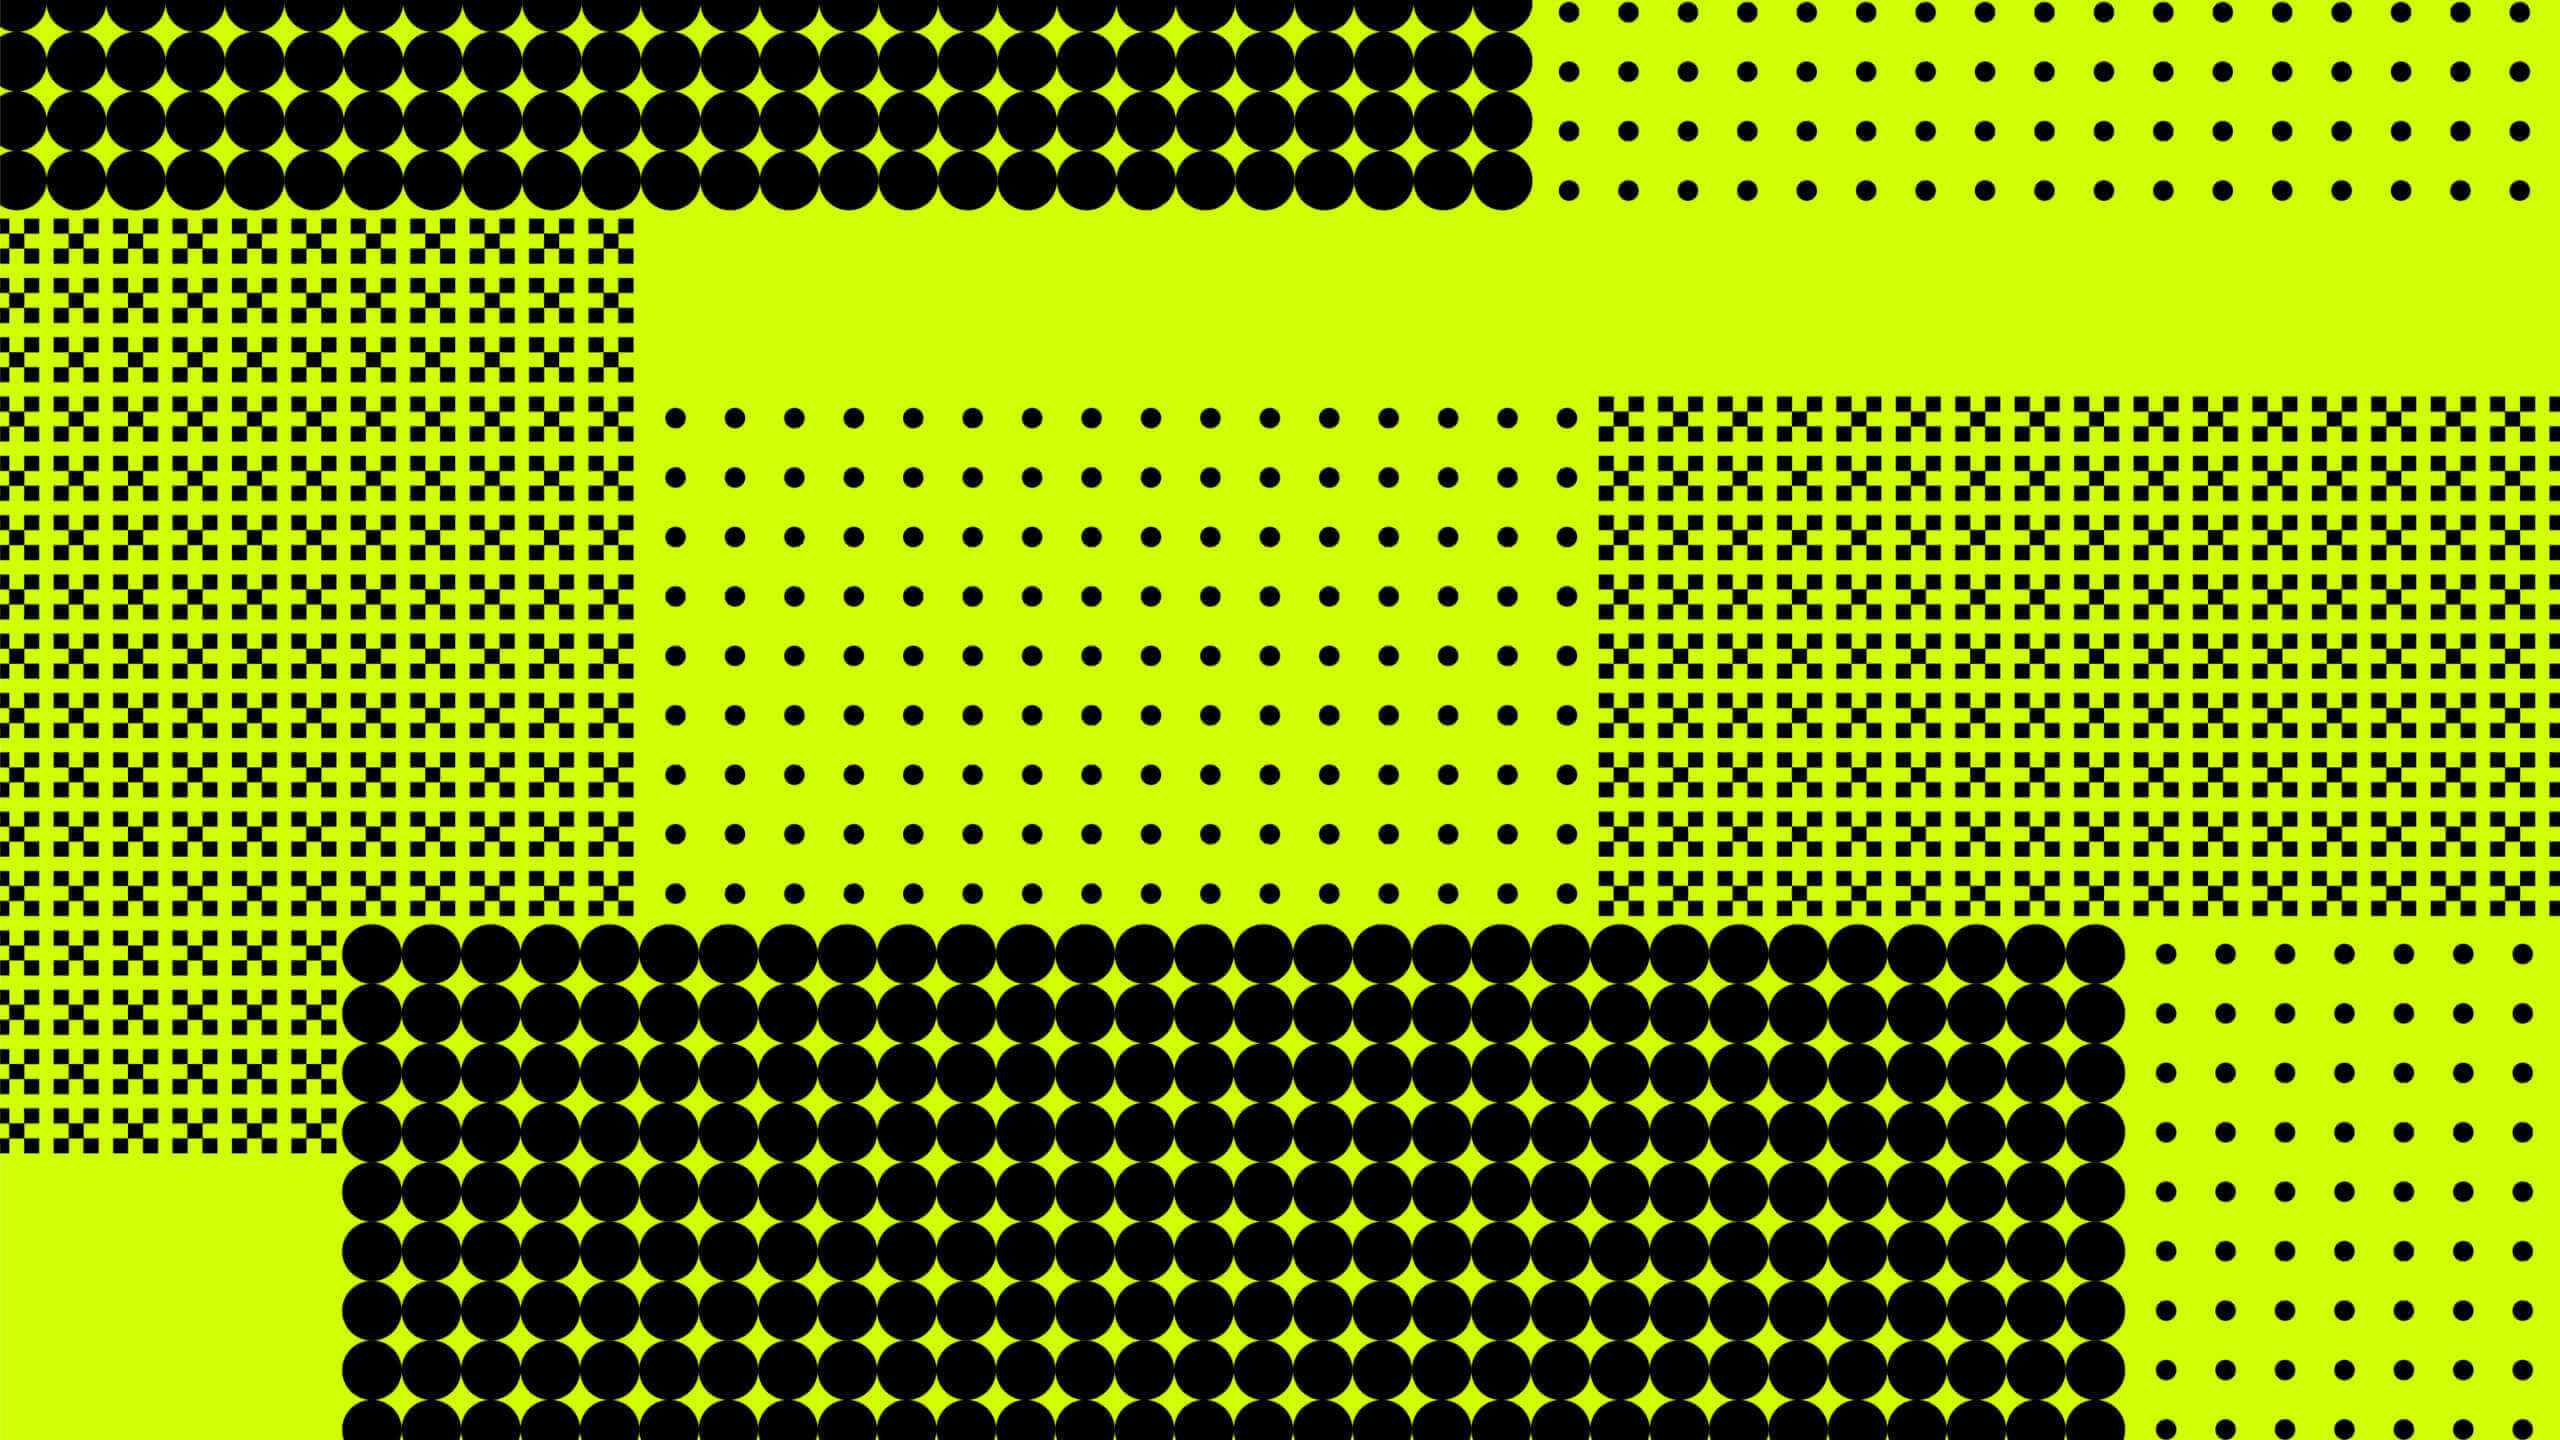 Matrix Neon graphic